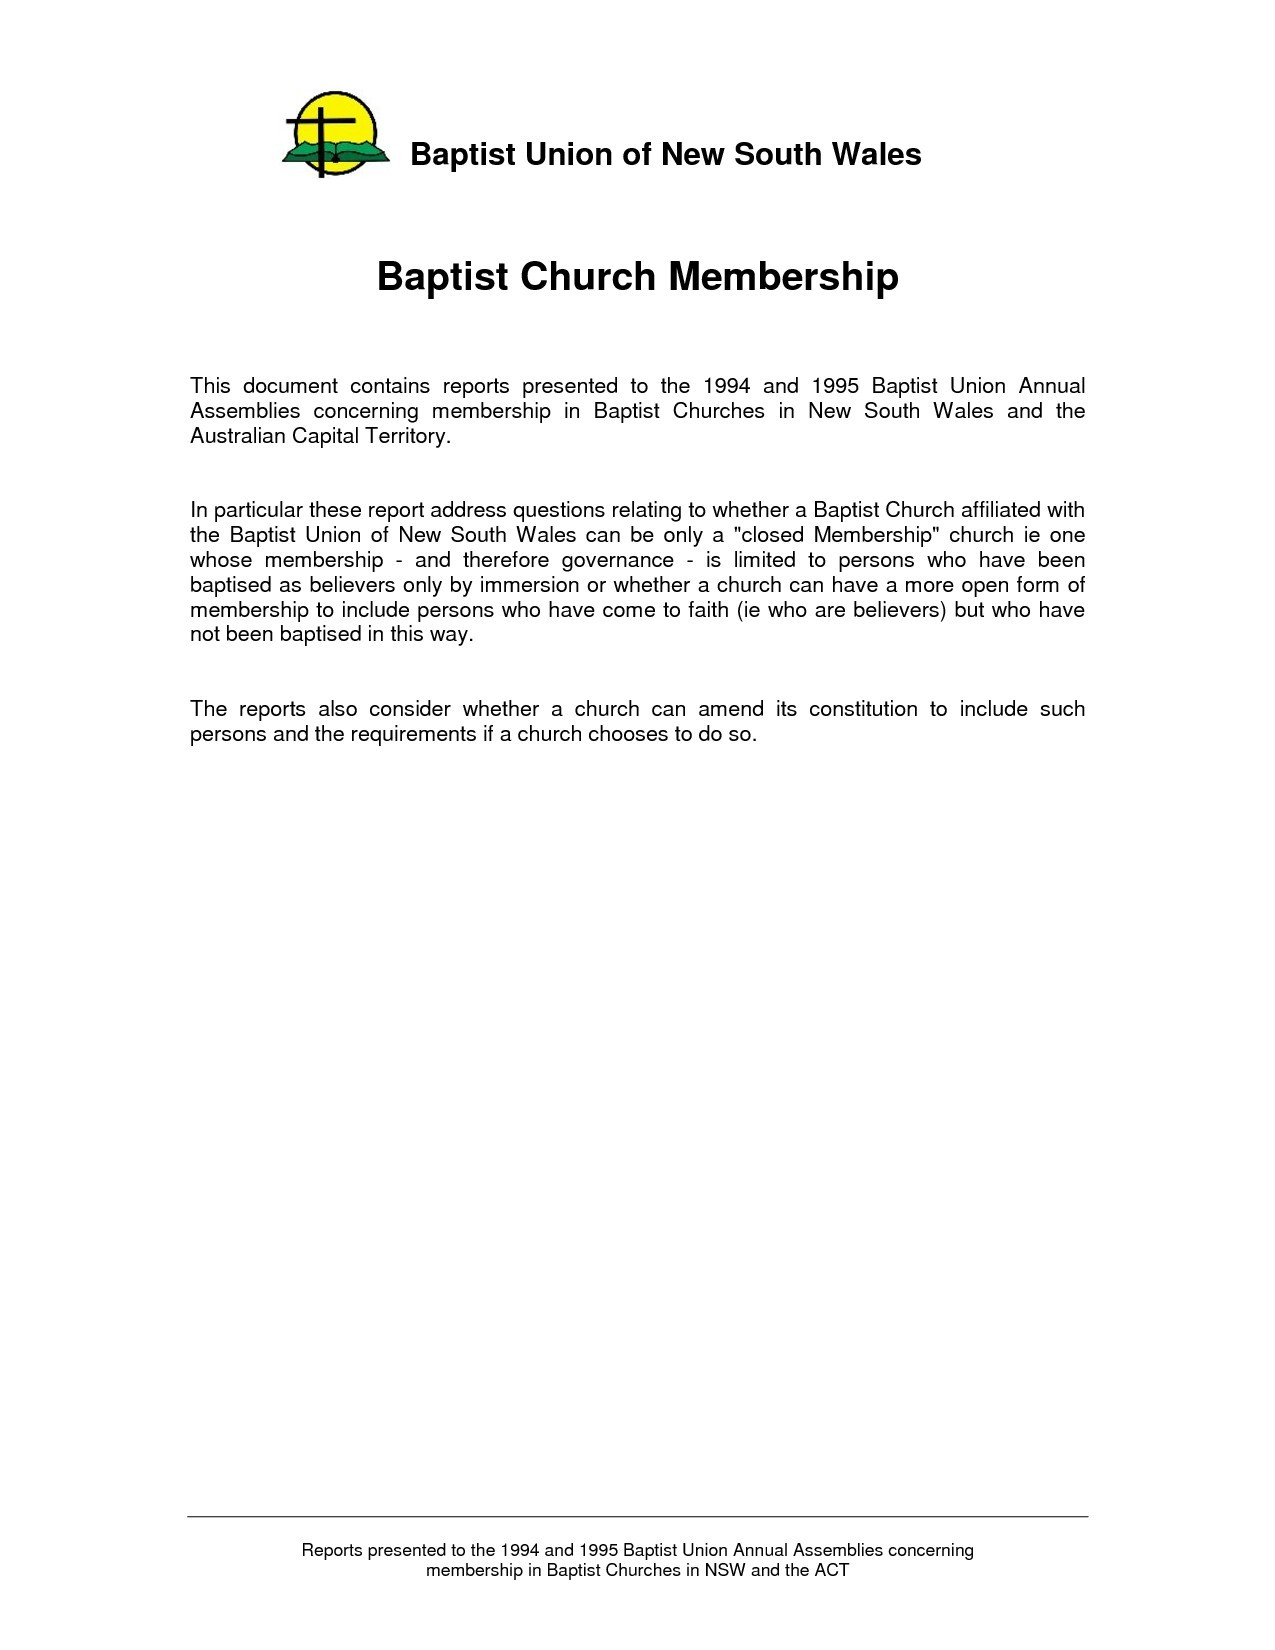 sample letter requesting transfer of church membership